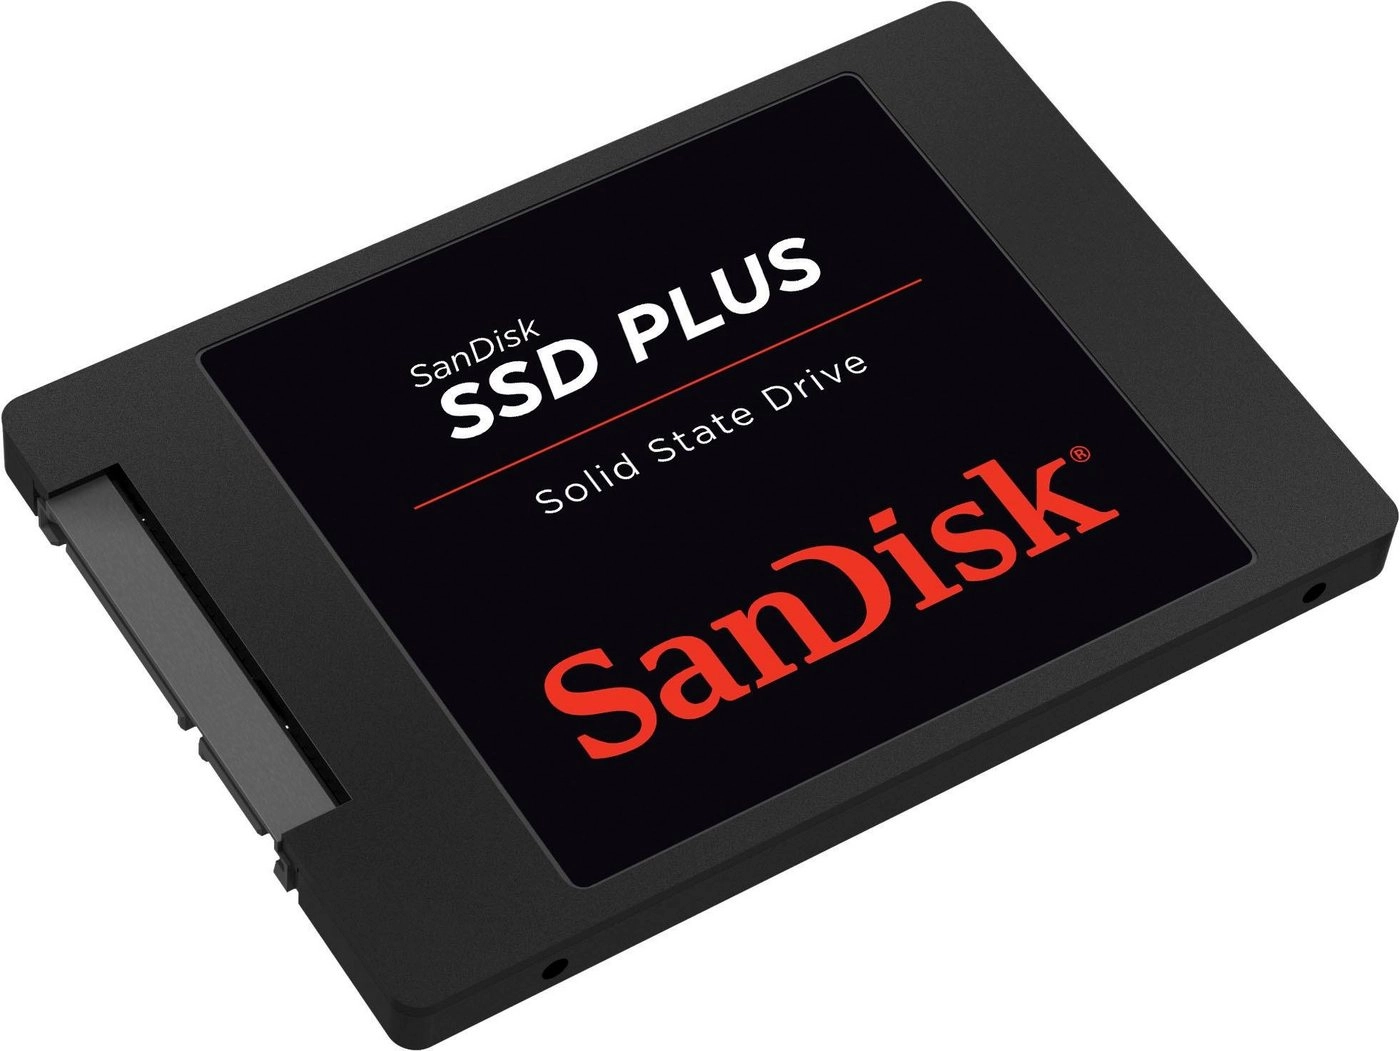 SSD Plus 240 GB